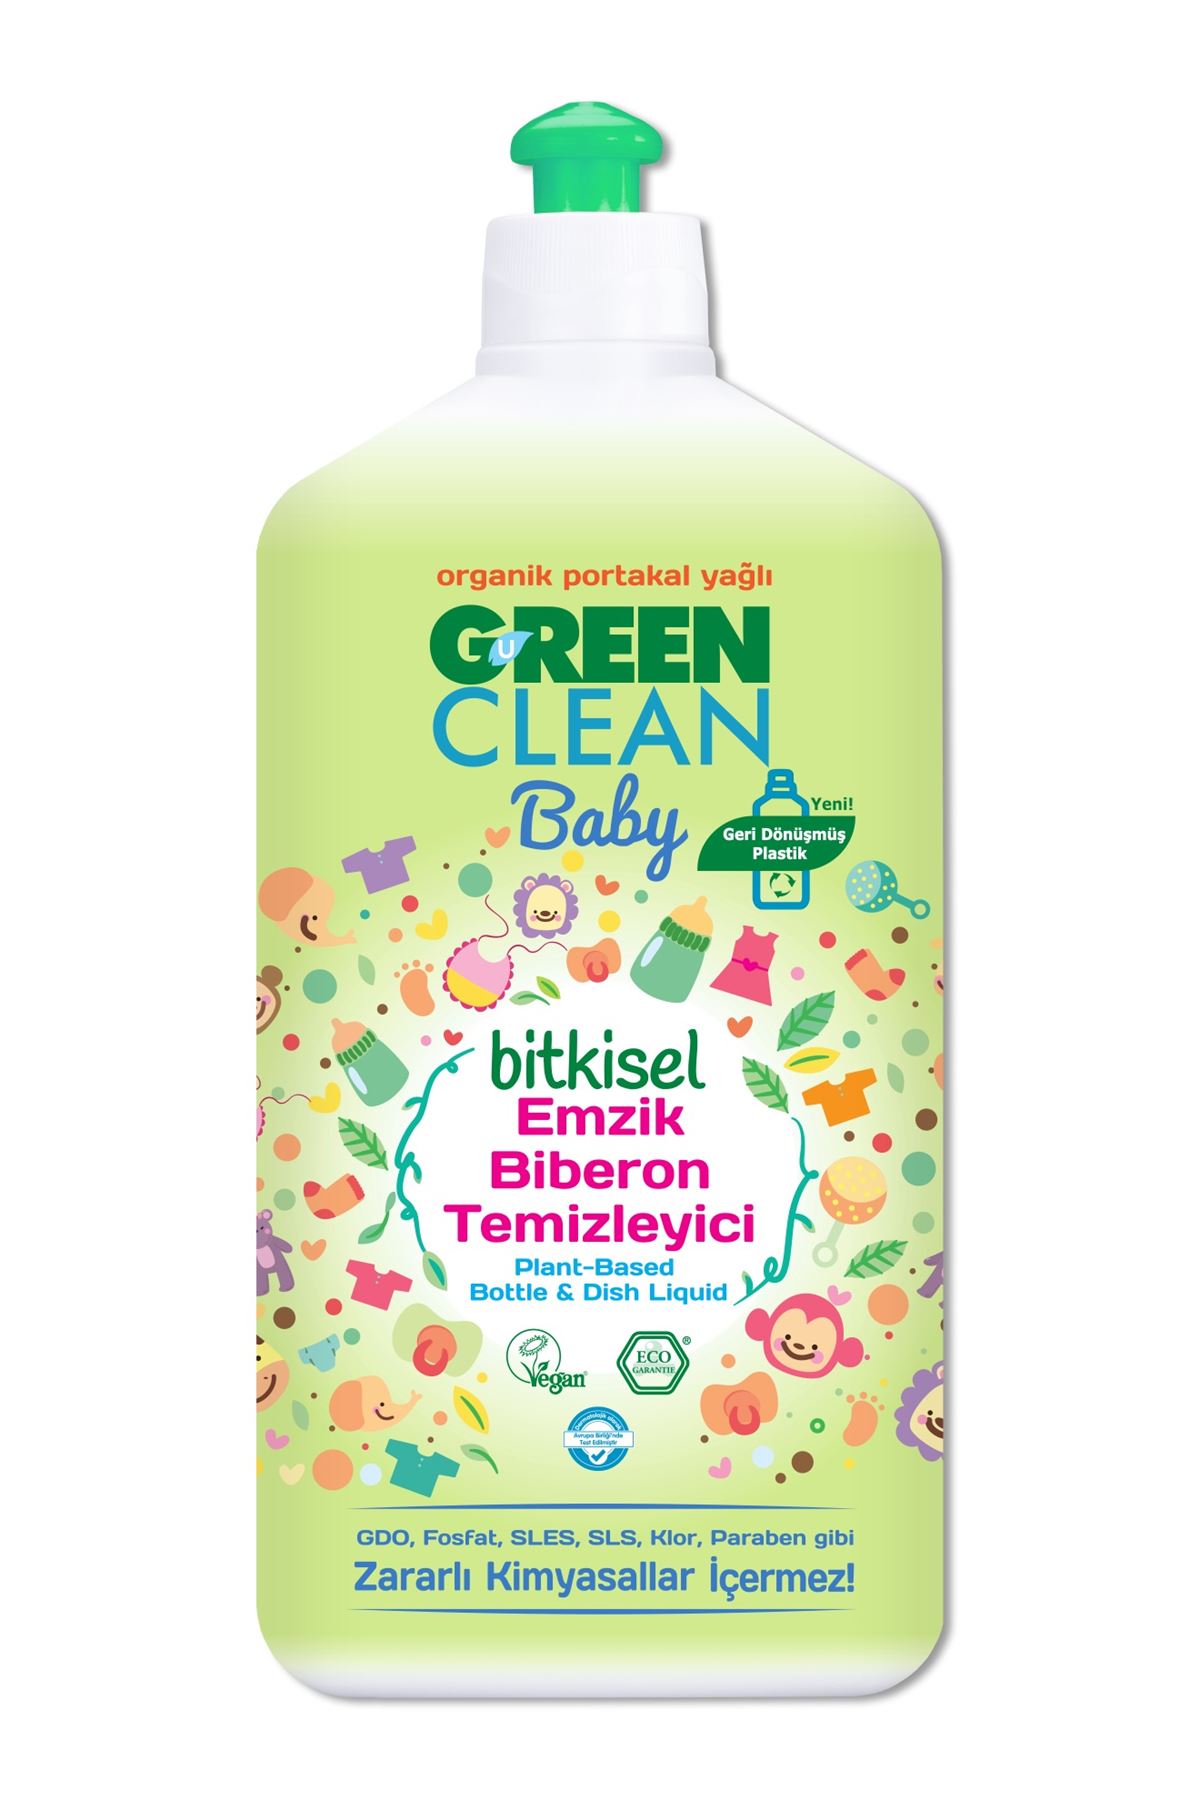 Green Clean Baby Bitkisel Emzik Biberon Temizleyici 500ml